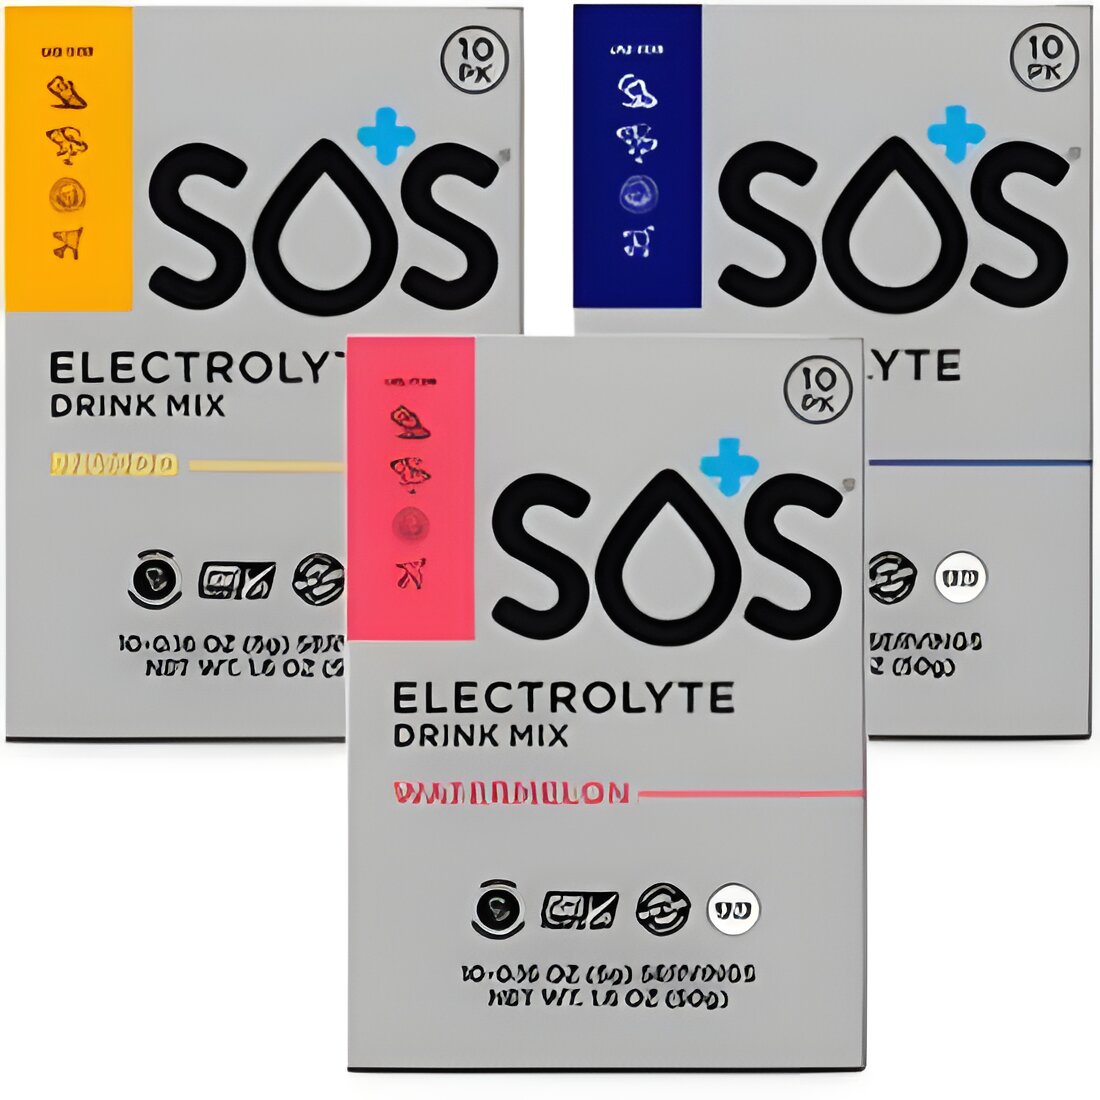 Free SOS Electrolyte Drink Mix